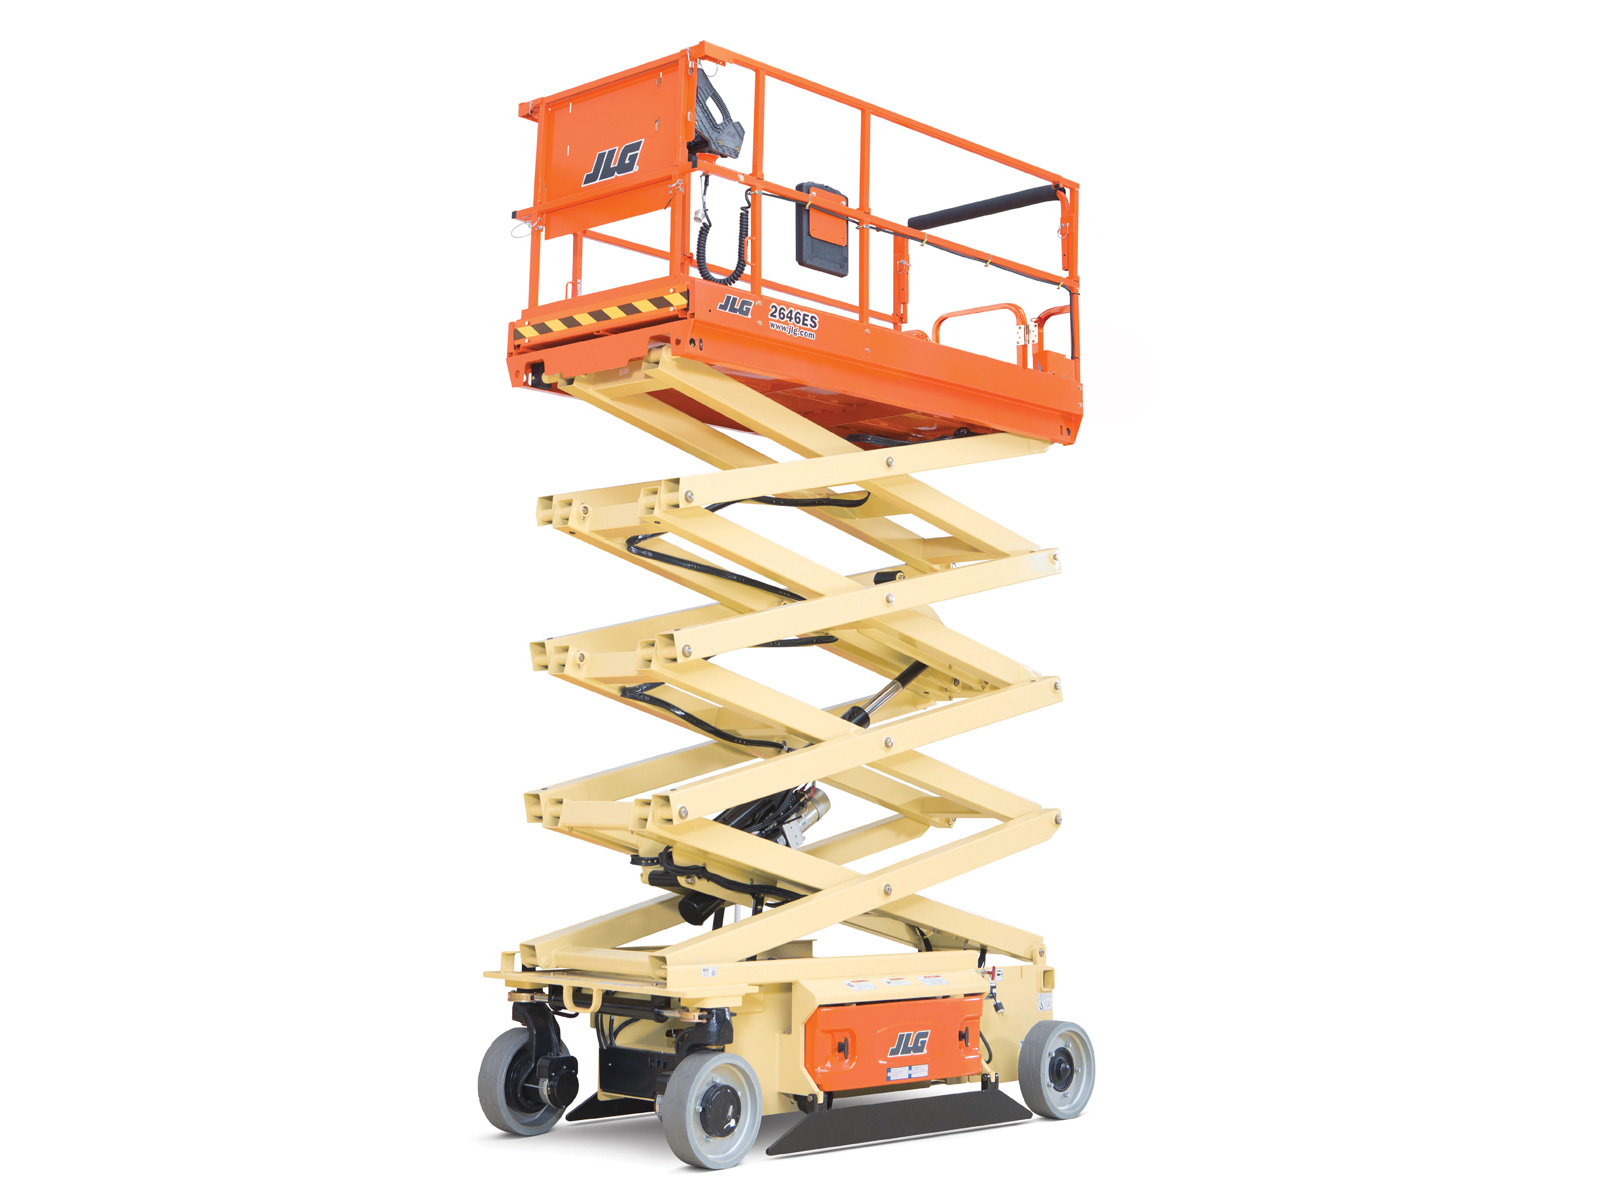 26 foot scissor lift for rent orange county